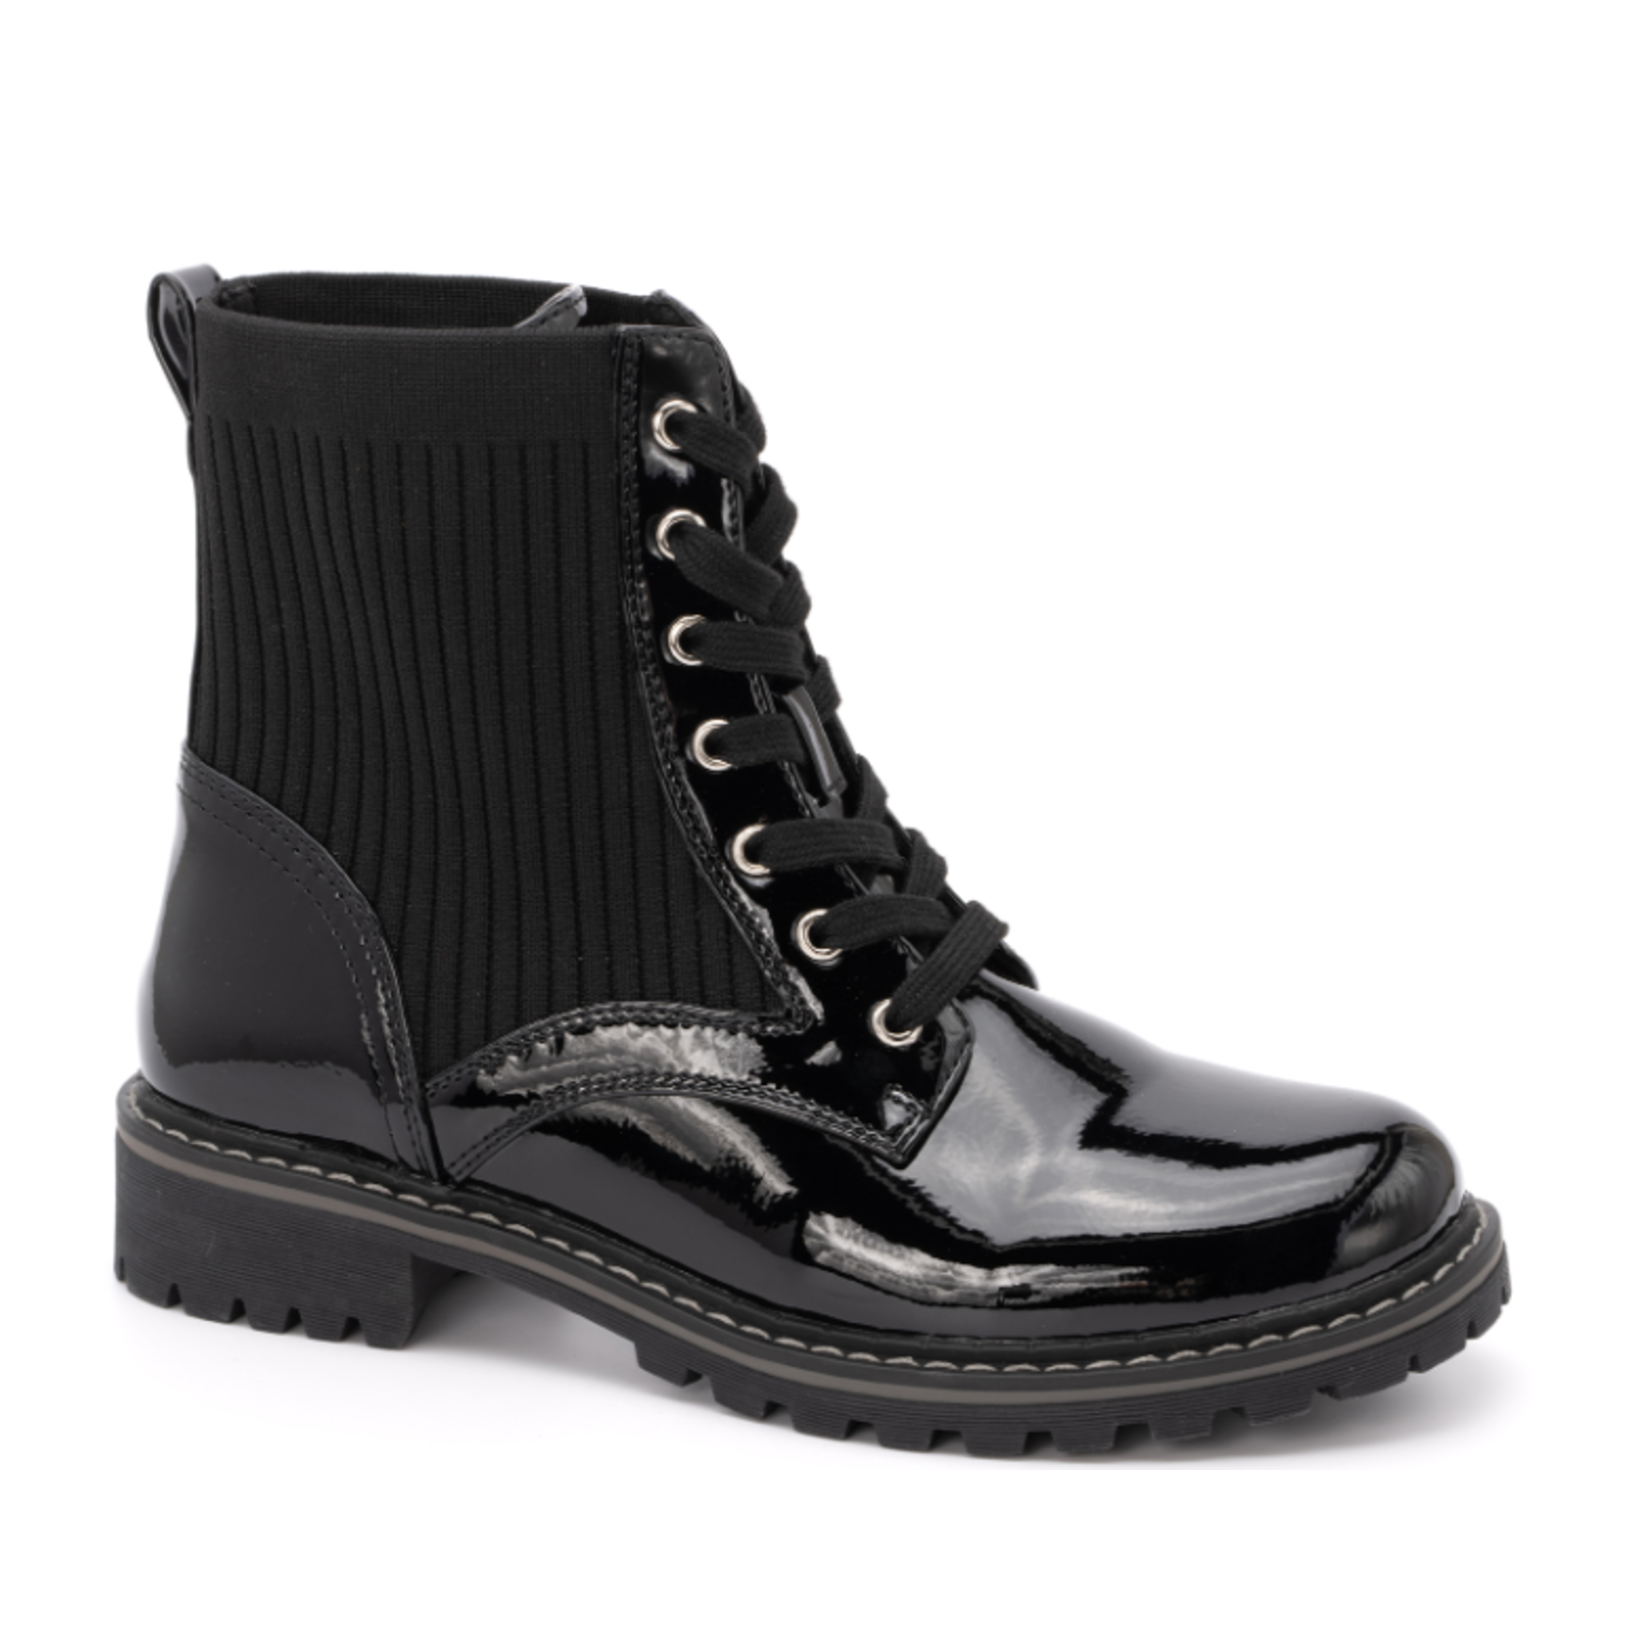 Corkys Corkys Creep It Real Boots Black Patent